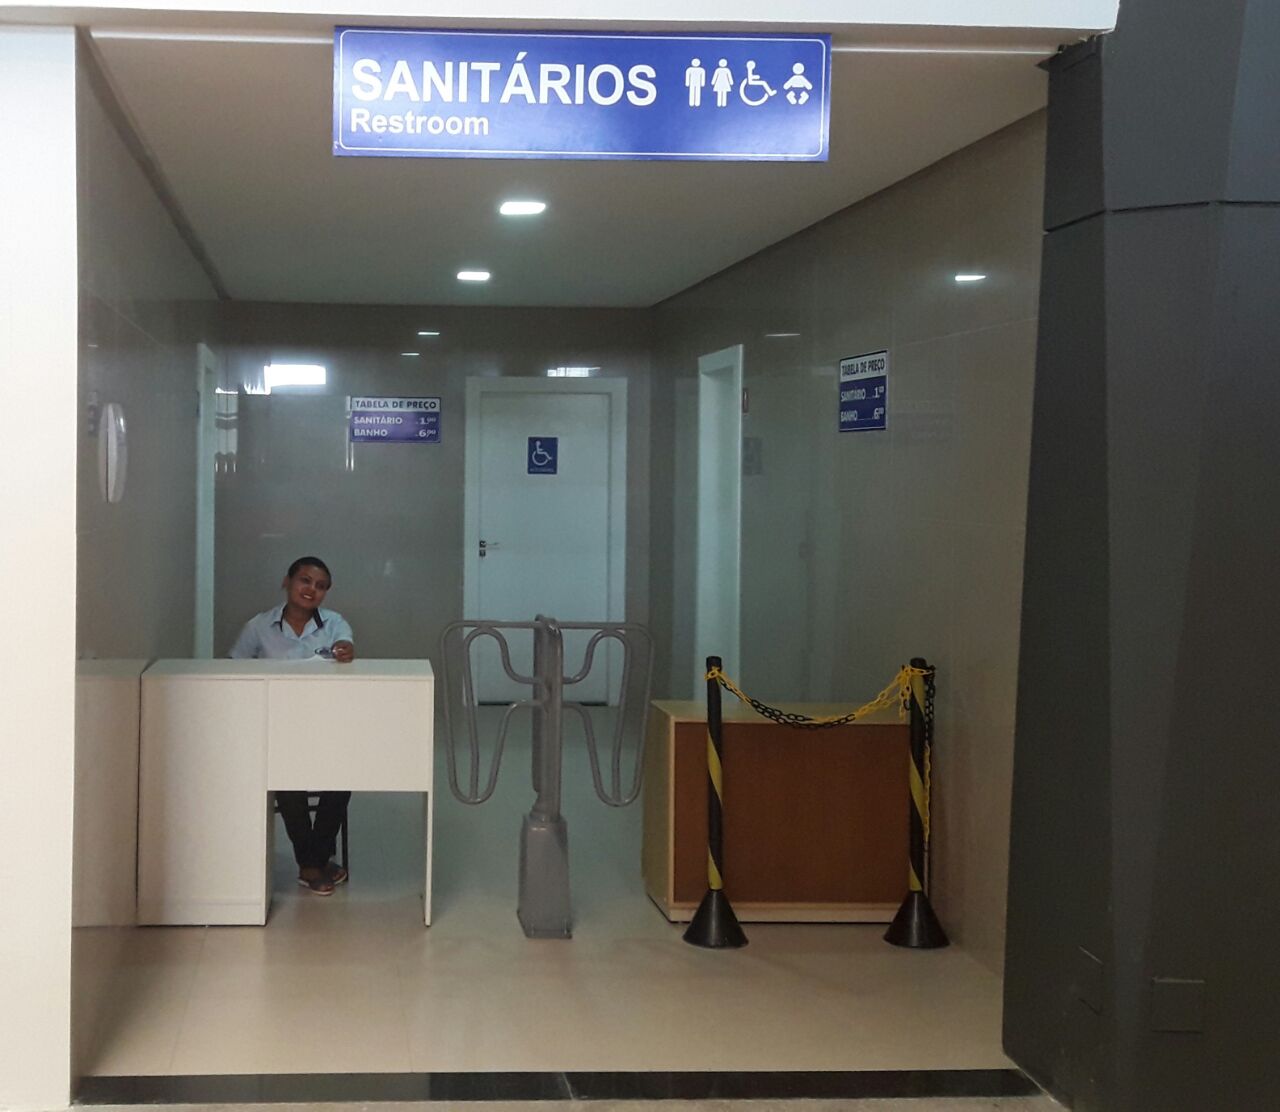 Banheiro tarifado do Terminal